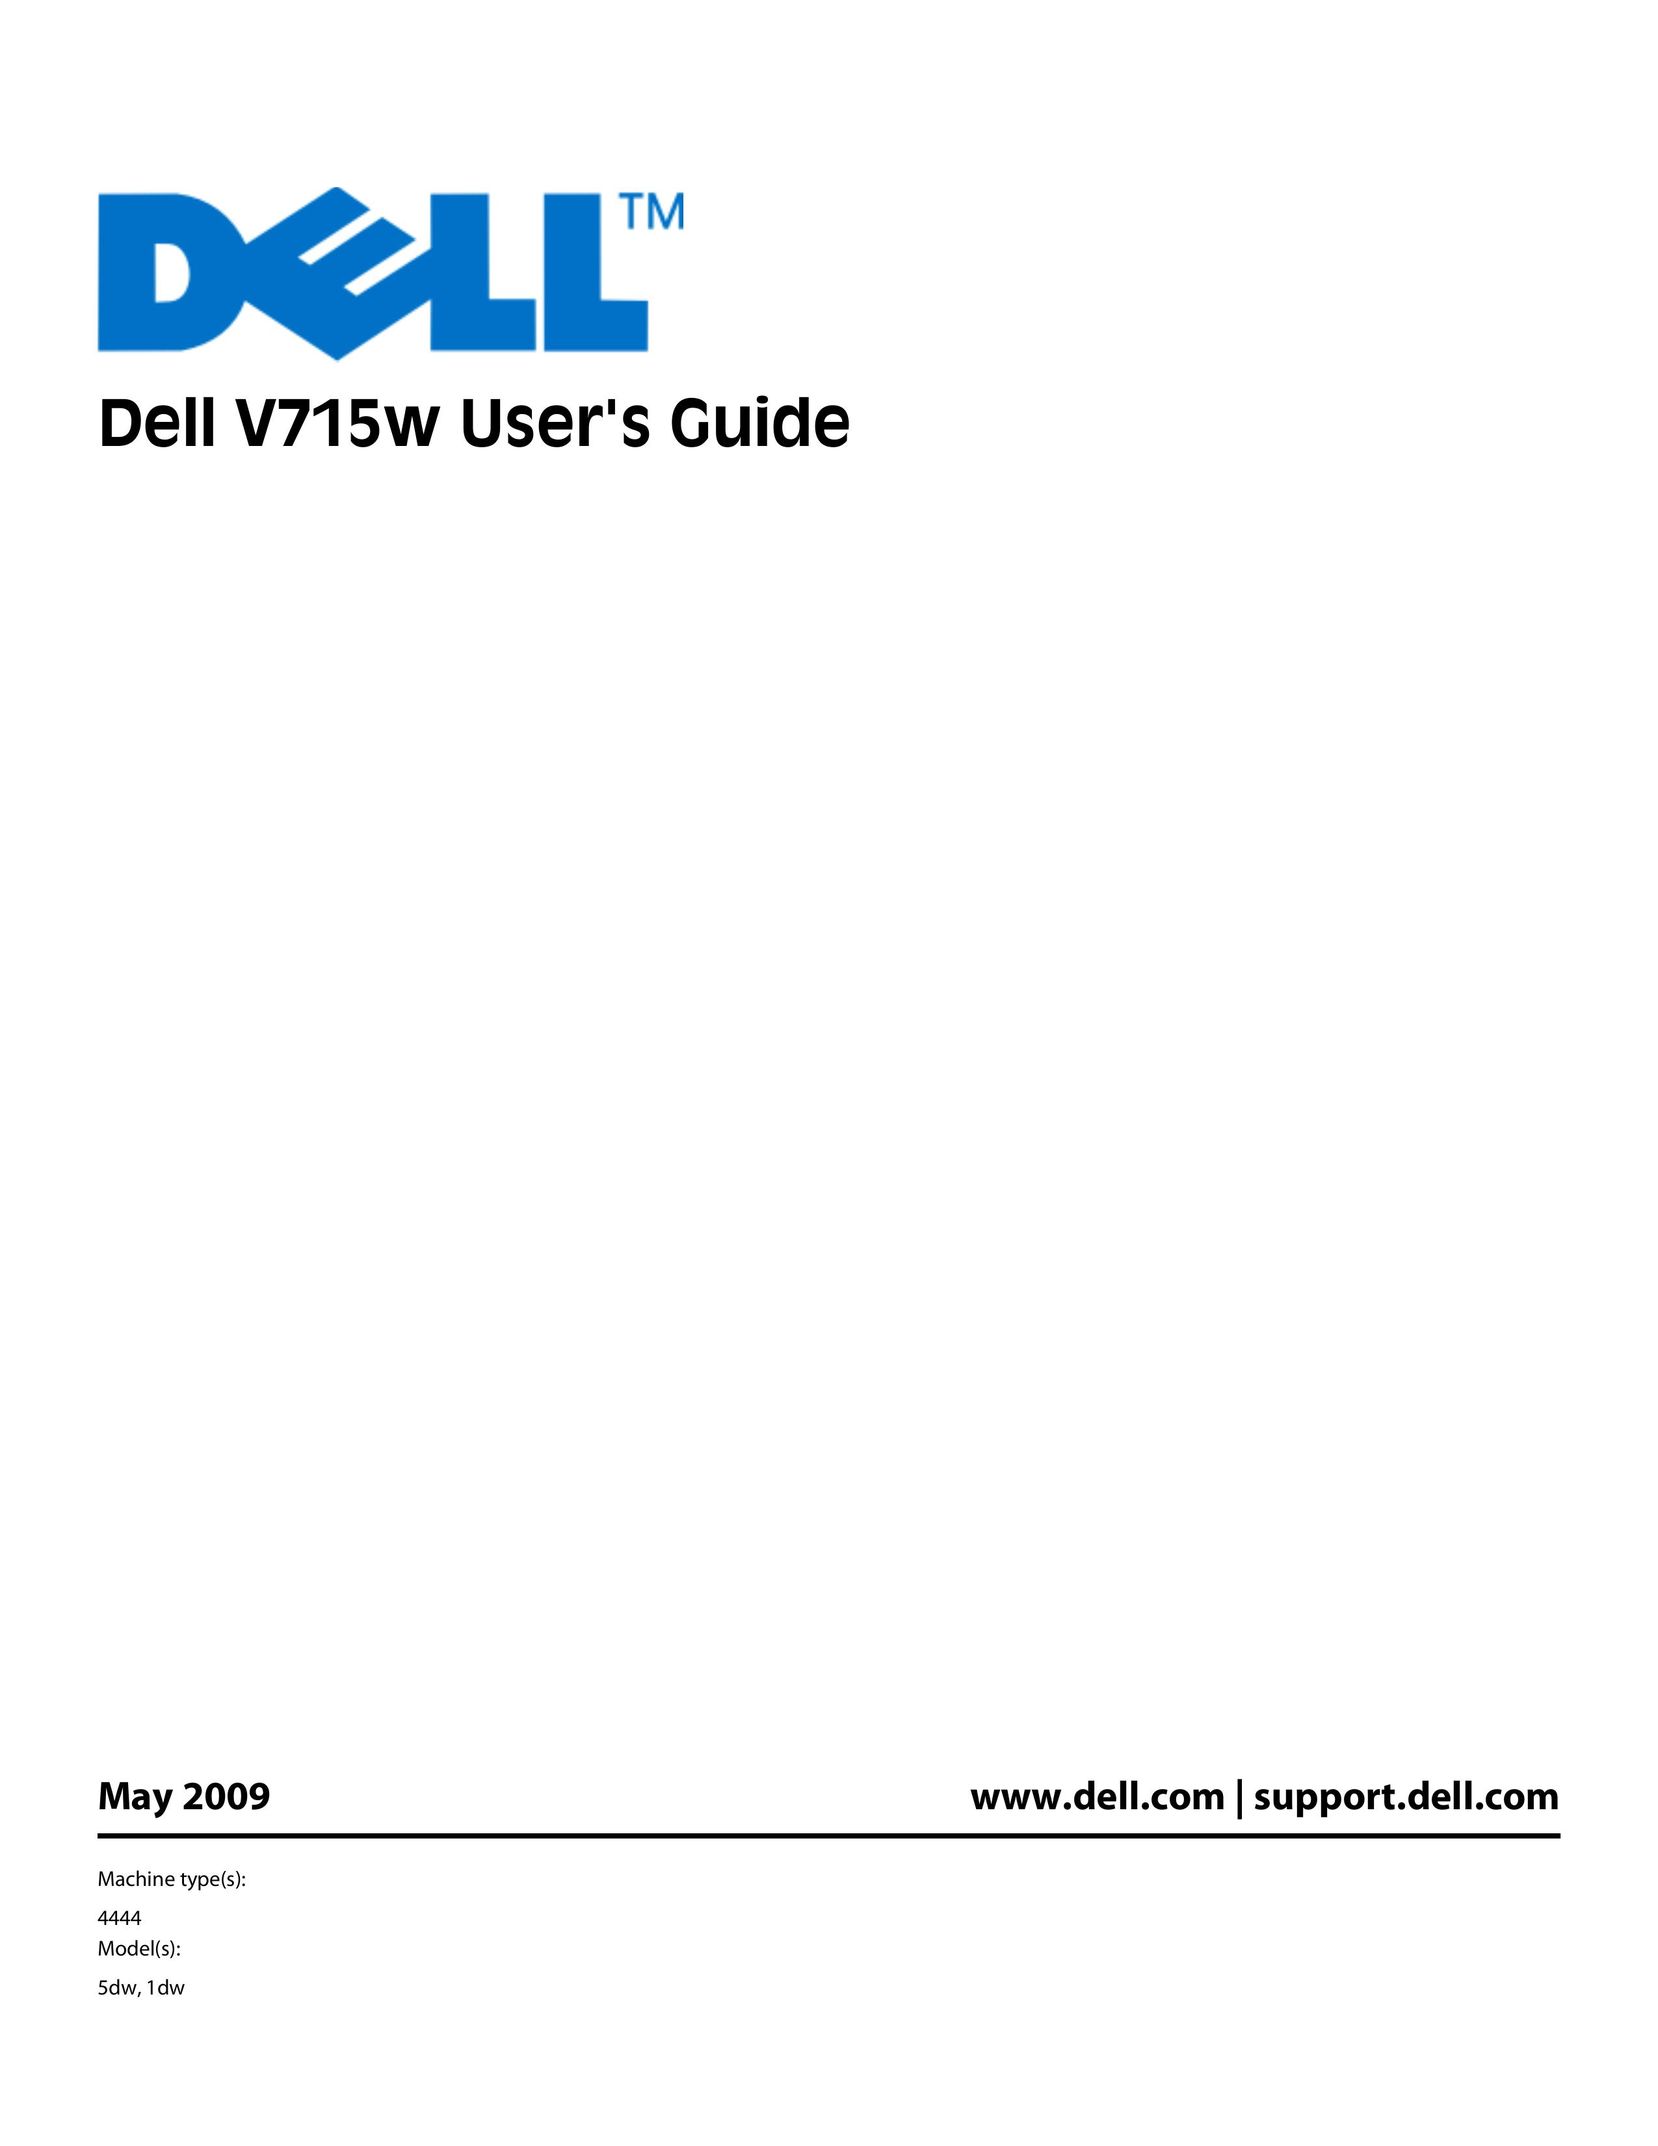 Dell 1dw Printer User Manual